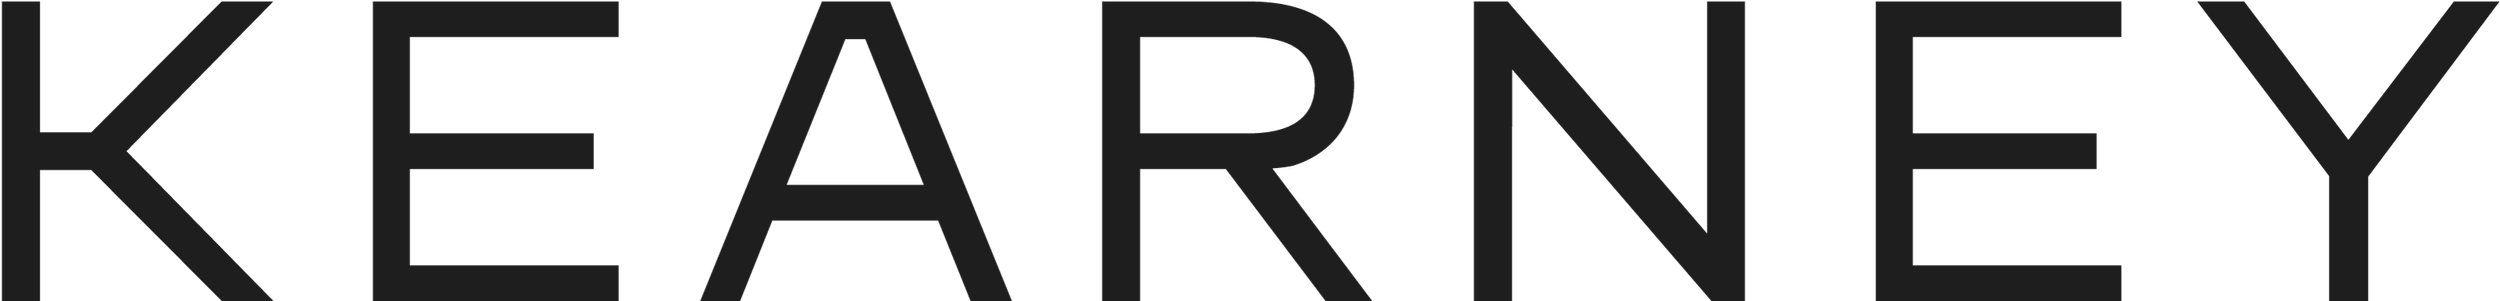 Kearney-Logo-Slate-RGB.png